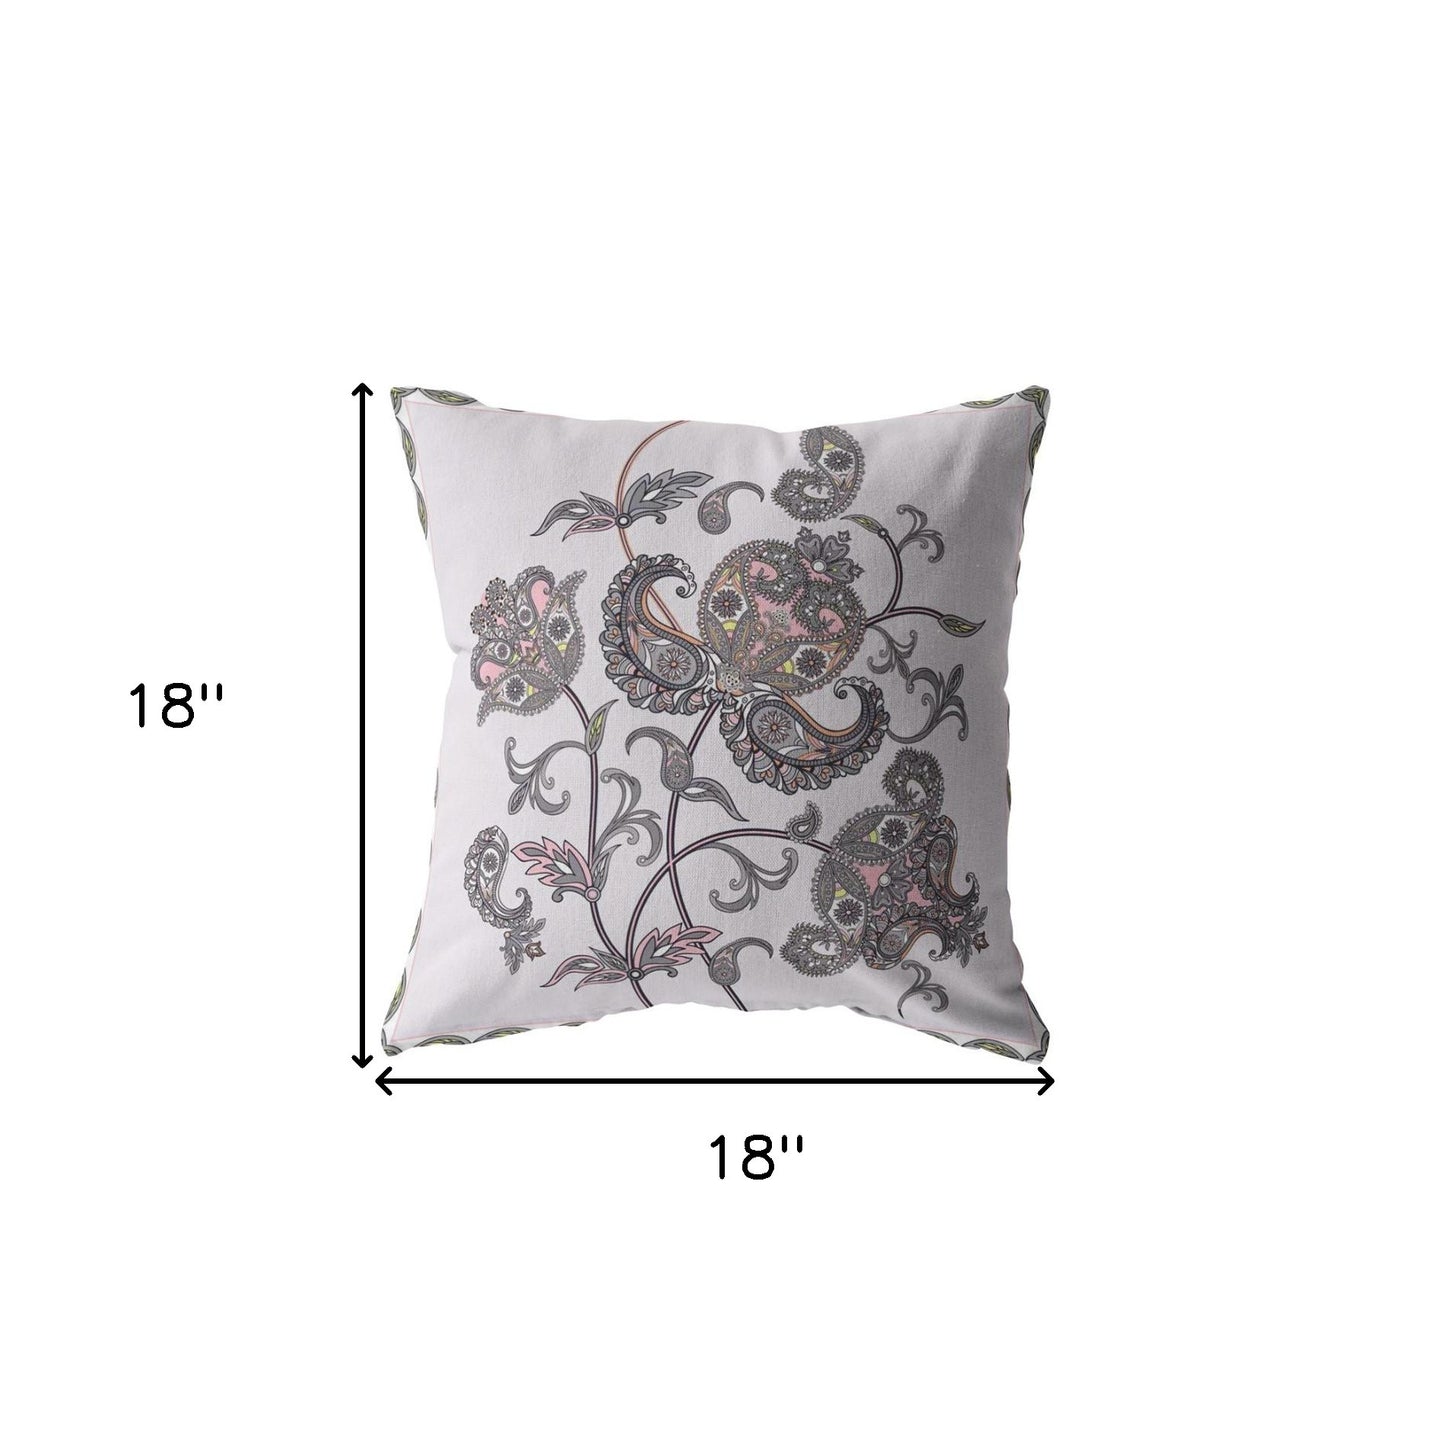 18” Gray White Wildflower Suede Throw Pillow